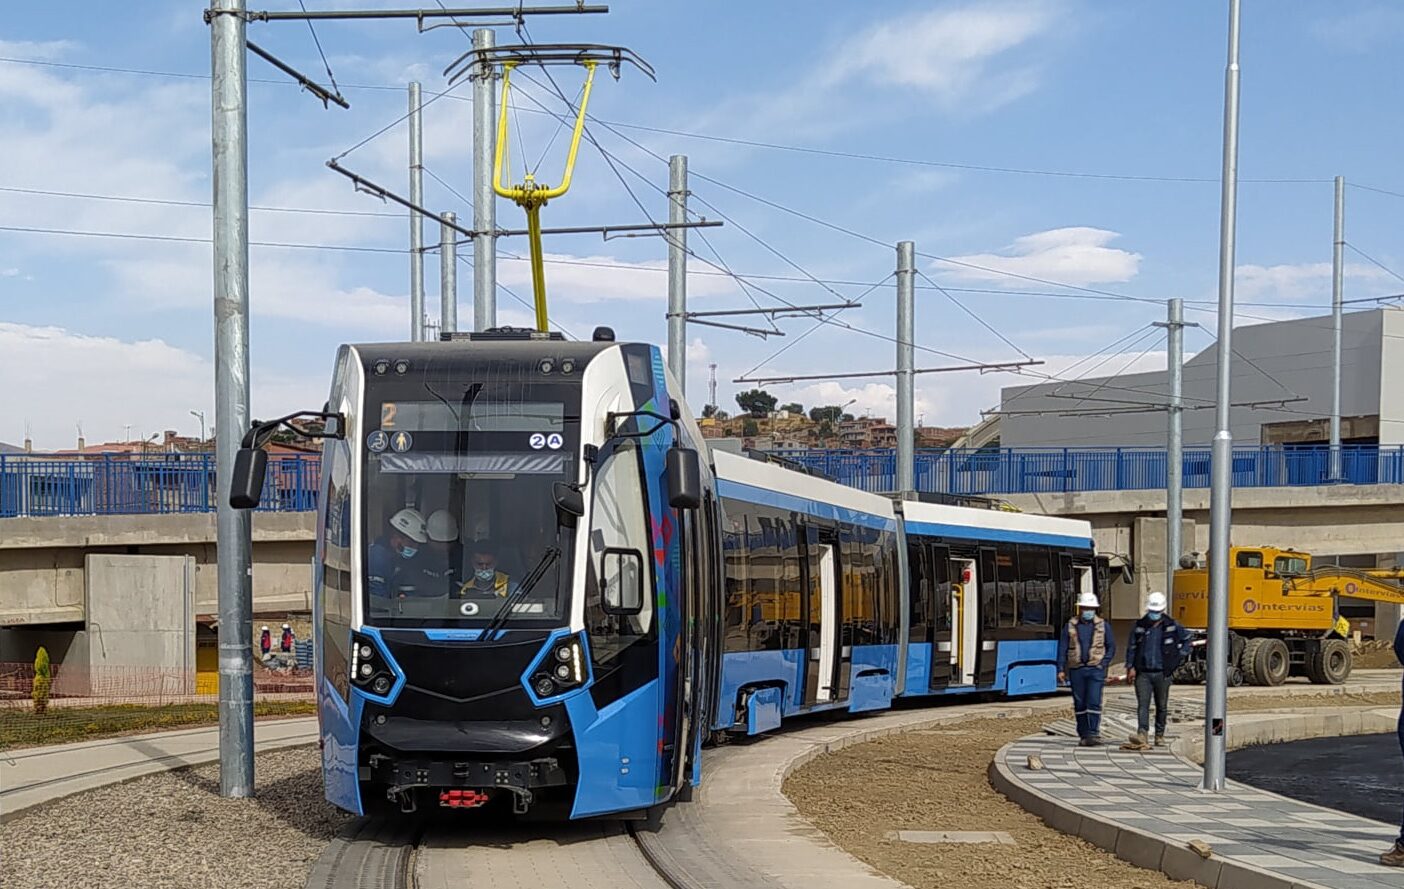 The final tests of the B85601M Metelitsa tram by Stadler in Cochabamba, Bolivia